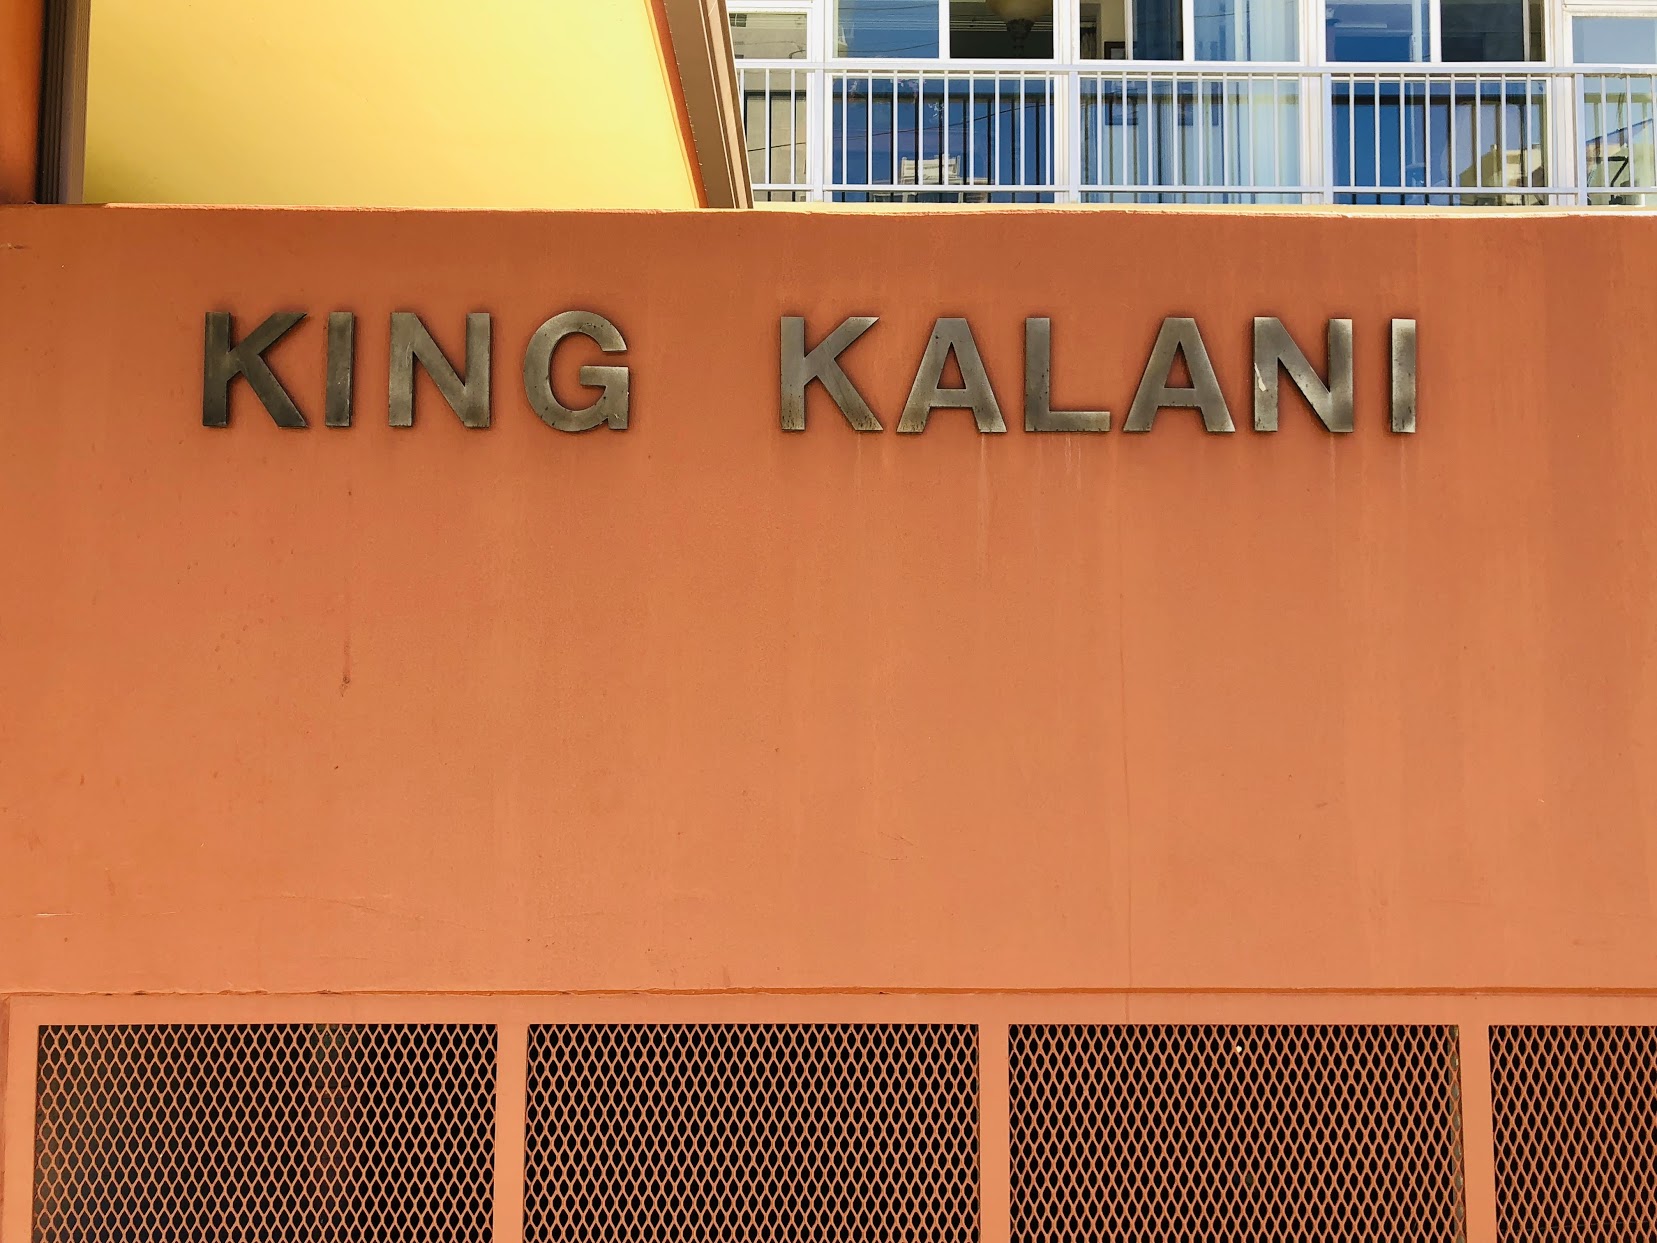 King Kalaniの看板